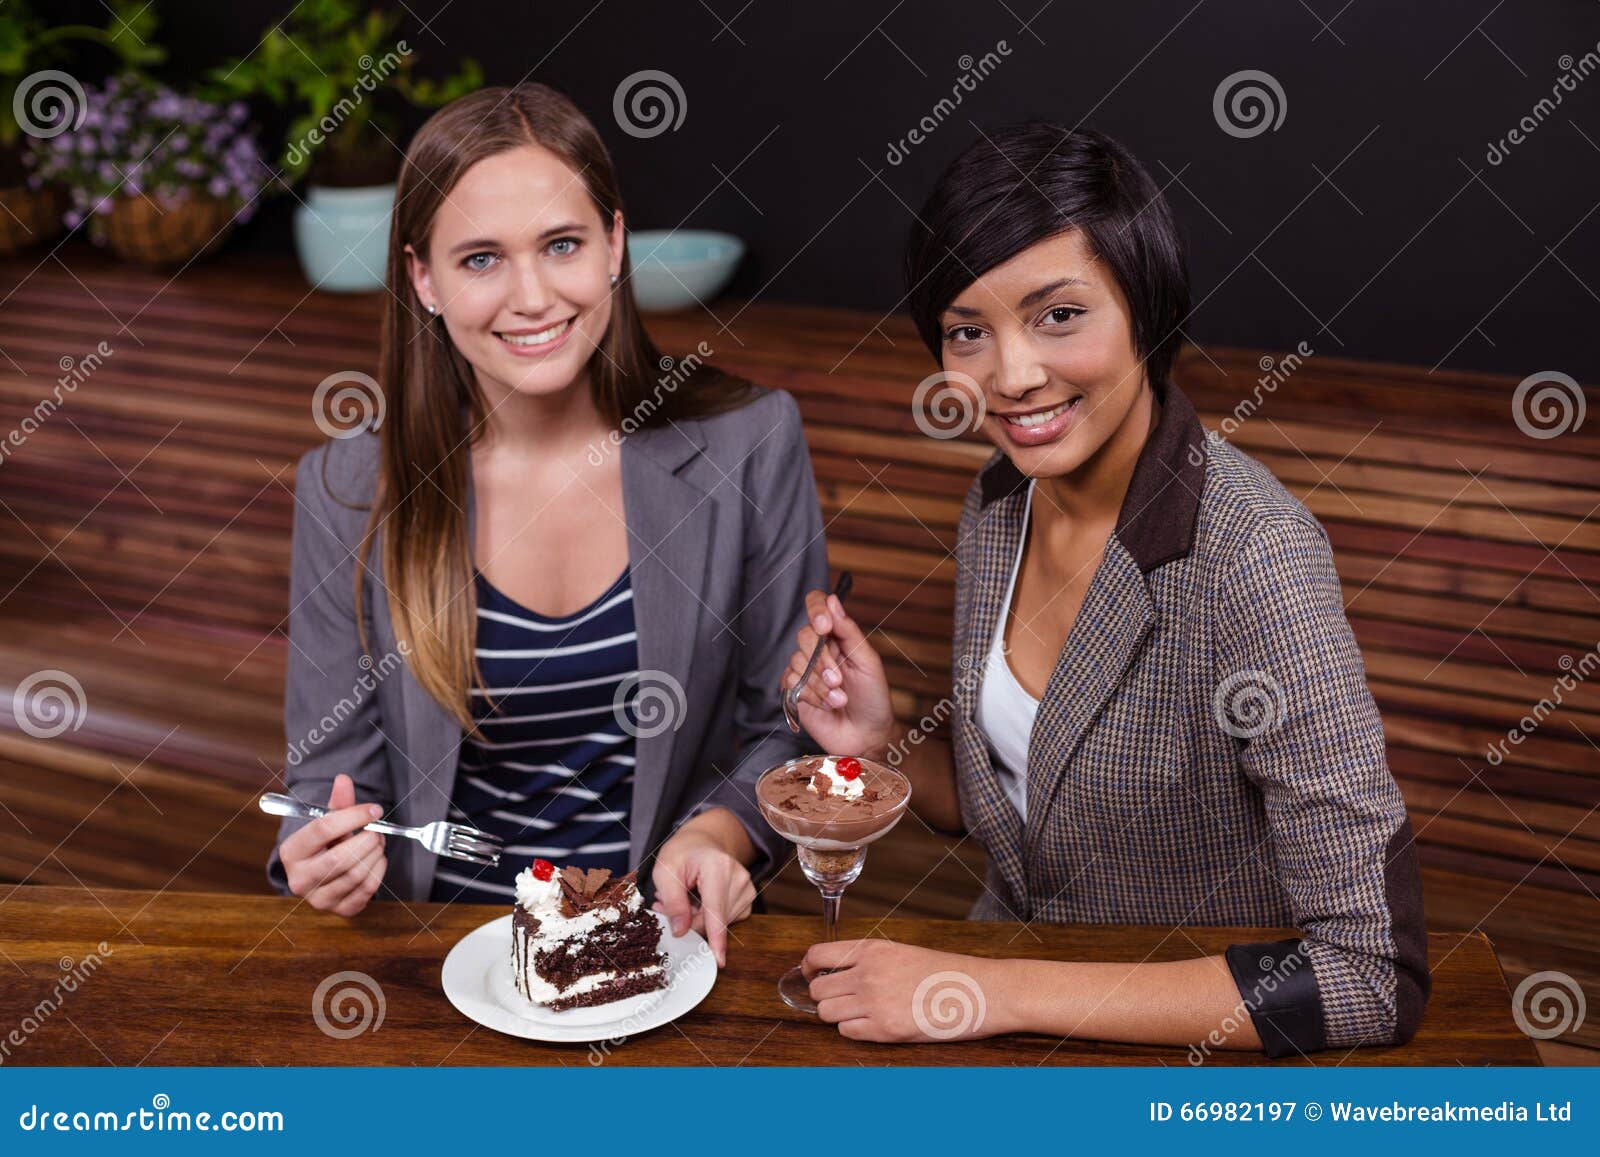 Pretty Women Eating Desserts Stock Image Image Of Desserts Female